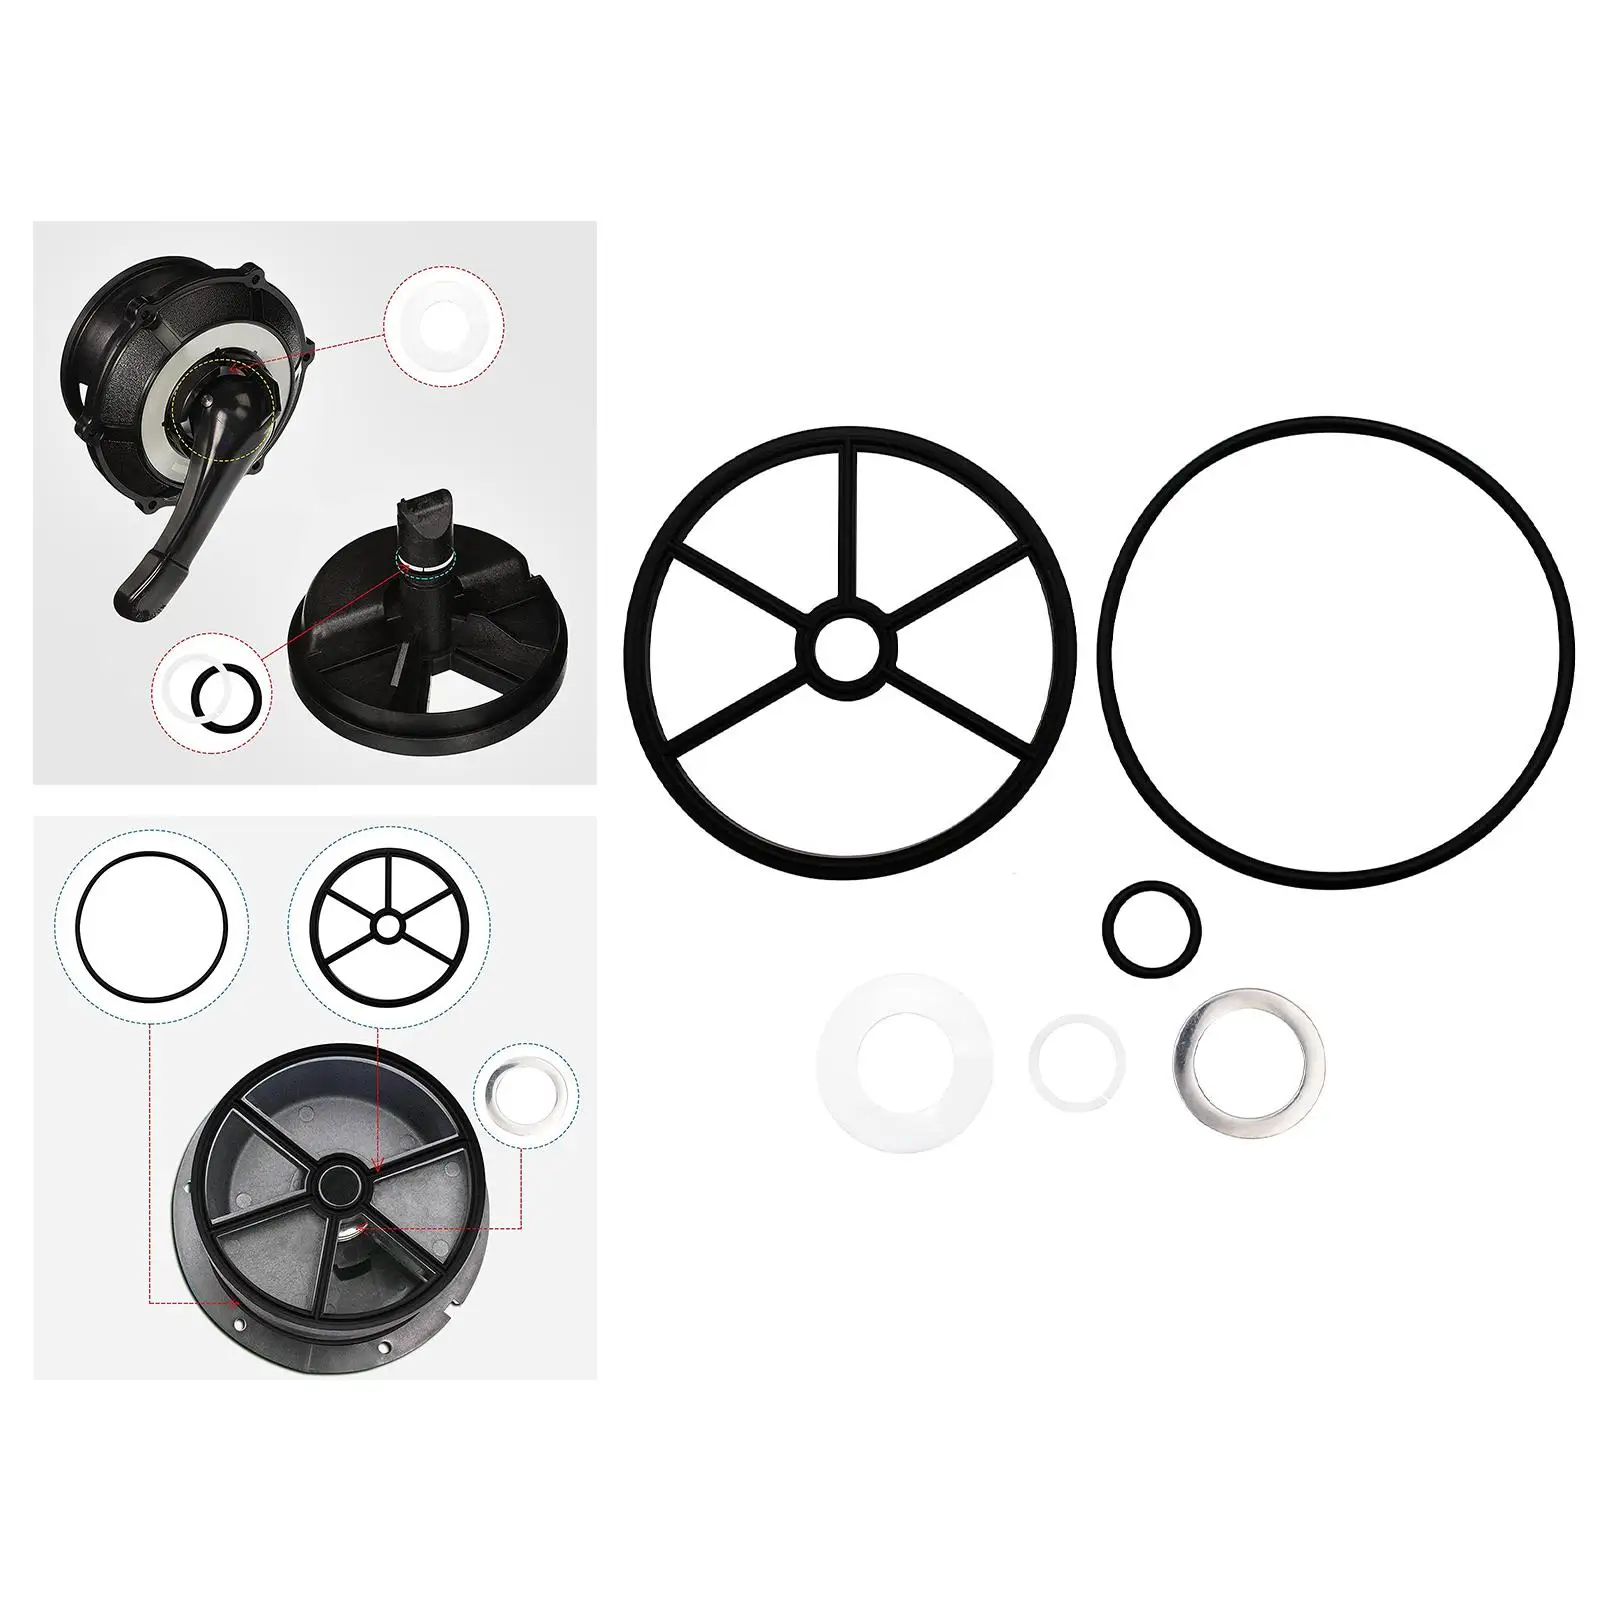 6Pcs Diverter Seal Ring Accessories for Pools and SPA Diverter Spider Gasket